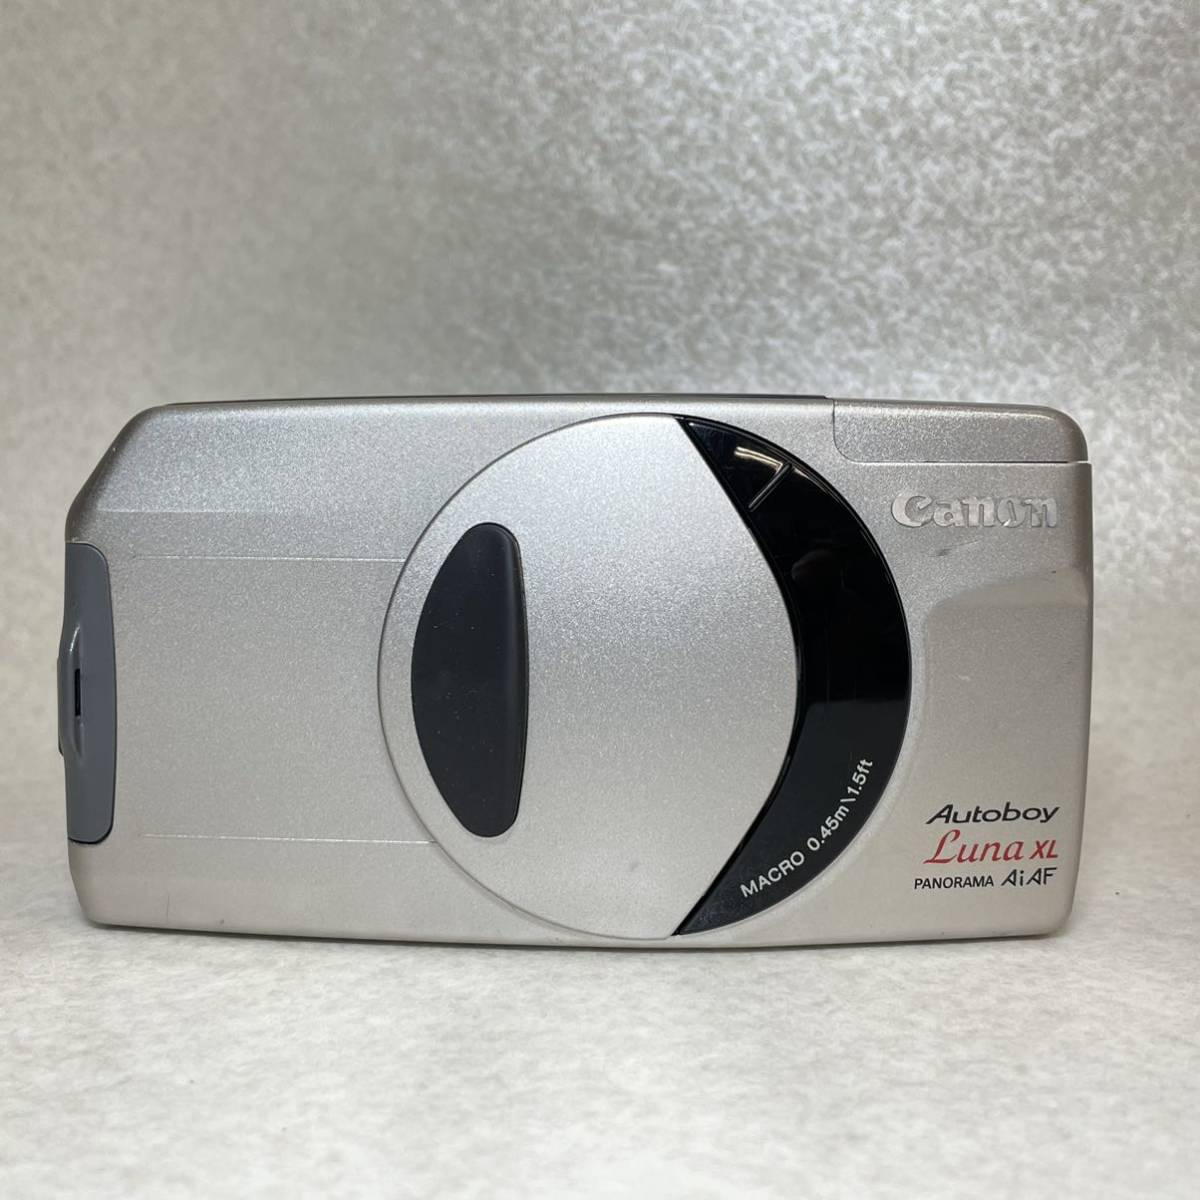 W5-2）Canon Autoboy Luna XL ZOOM LENS 28-70mm 1:5.6-7.8 コンパクトフィルムカメラ （166） _画像1